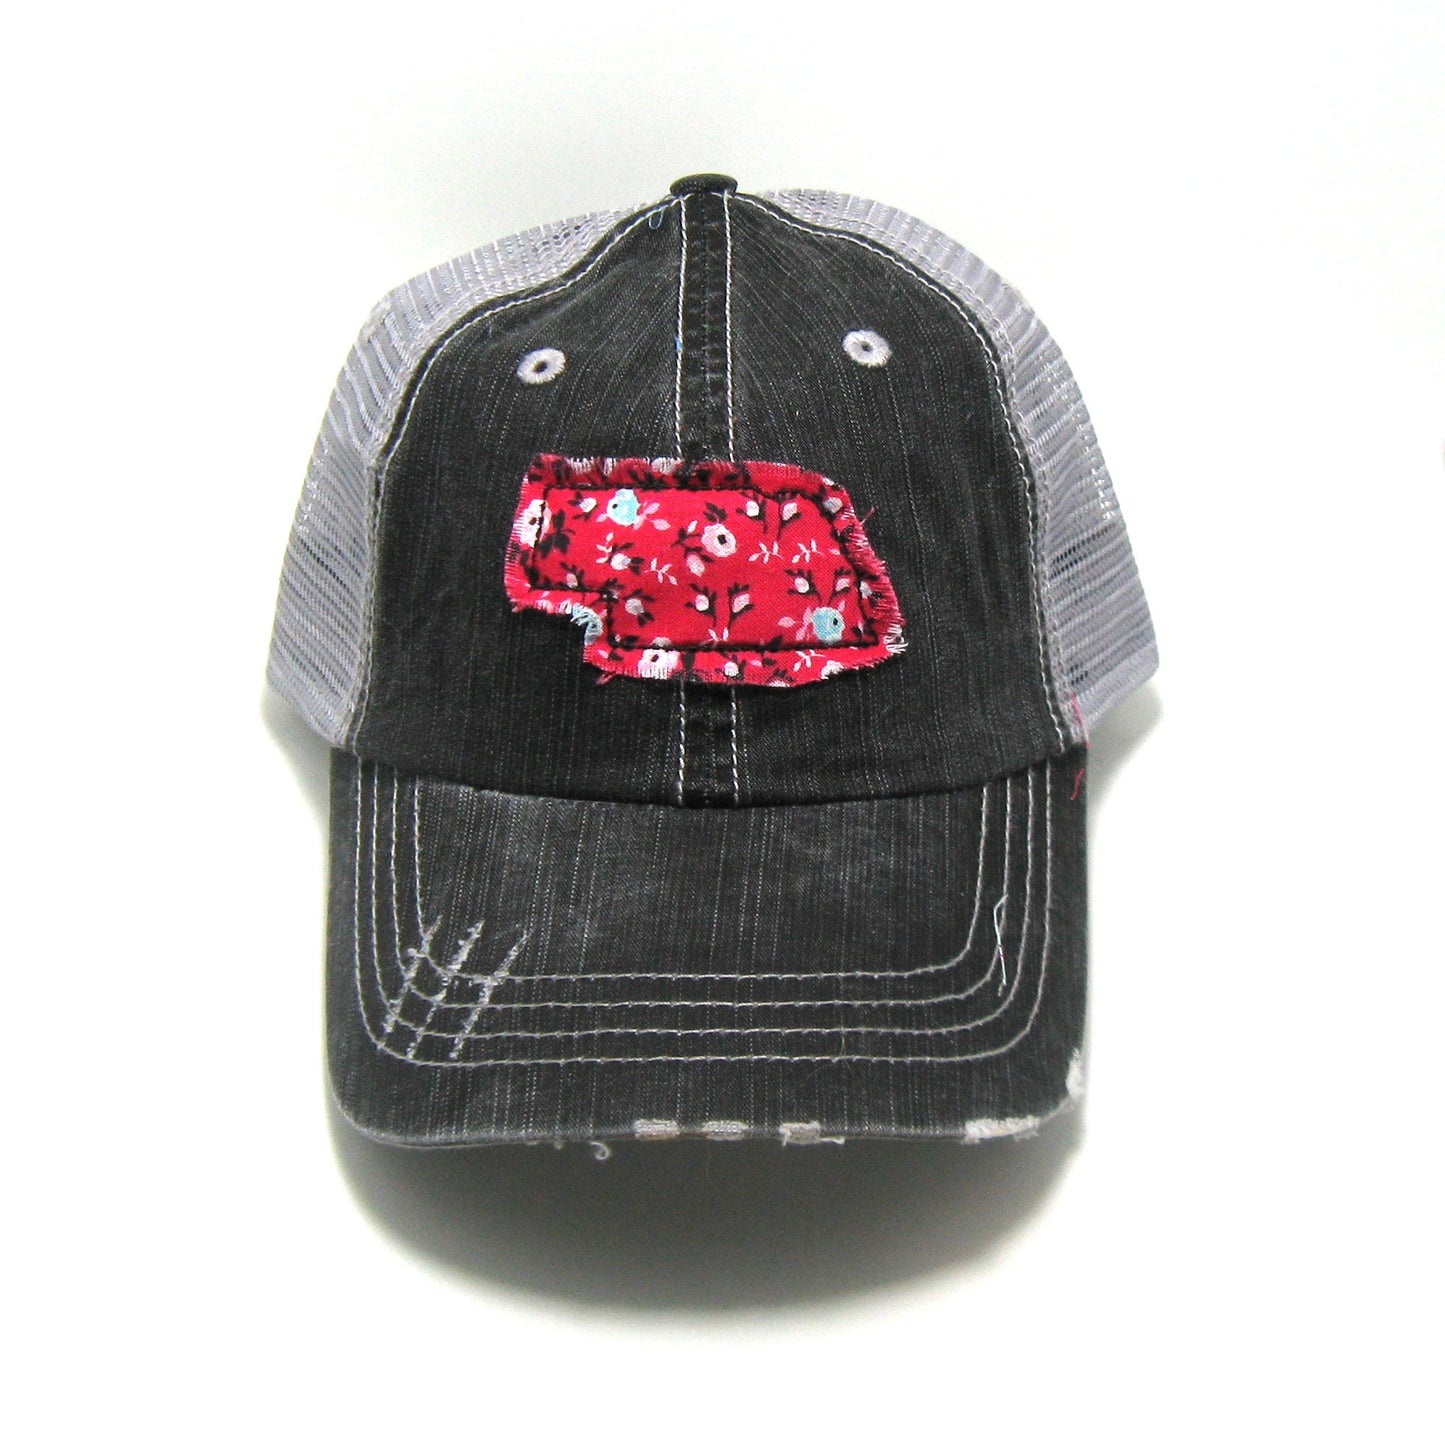 Nebraska Hat - Distressed Ponytail or Messy Bun Hat  - Many Fabric Choices